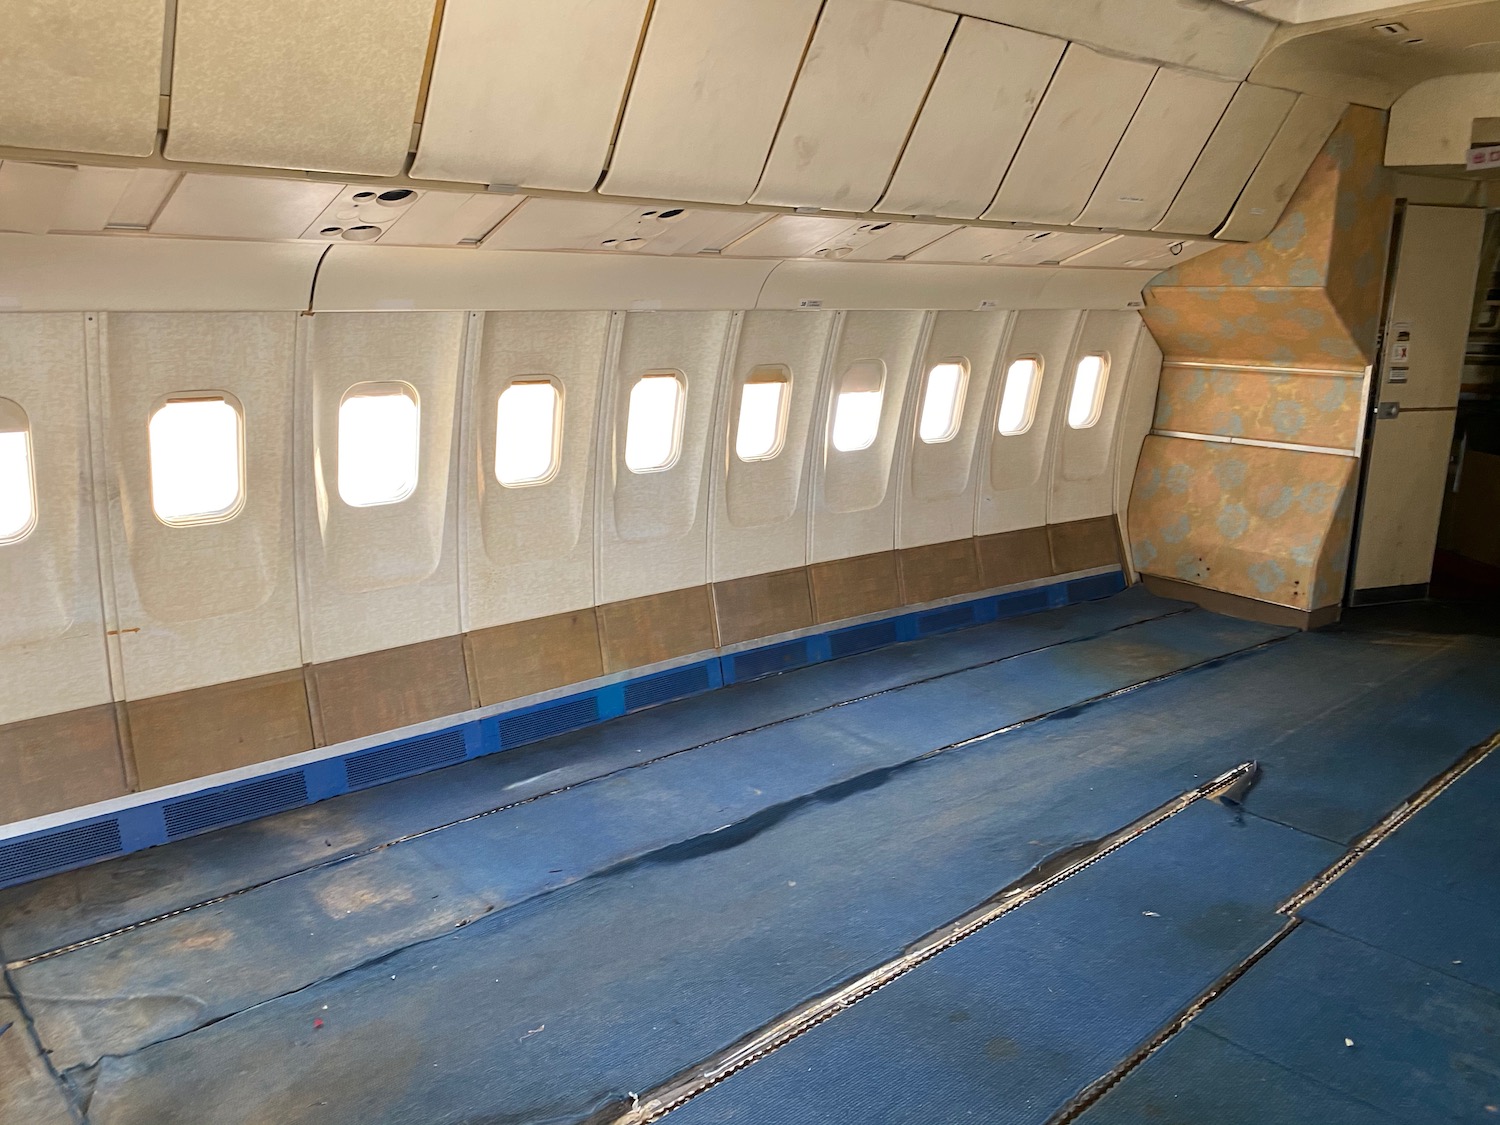 an airplane with windows